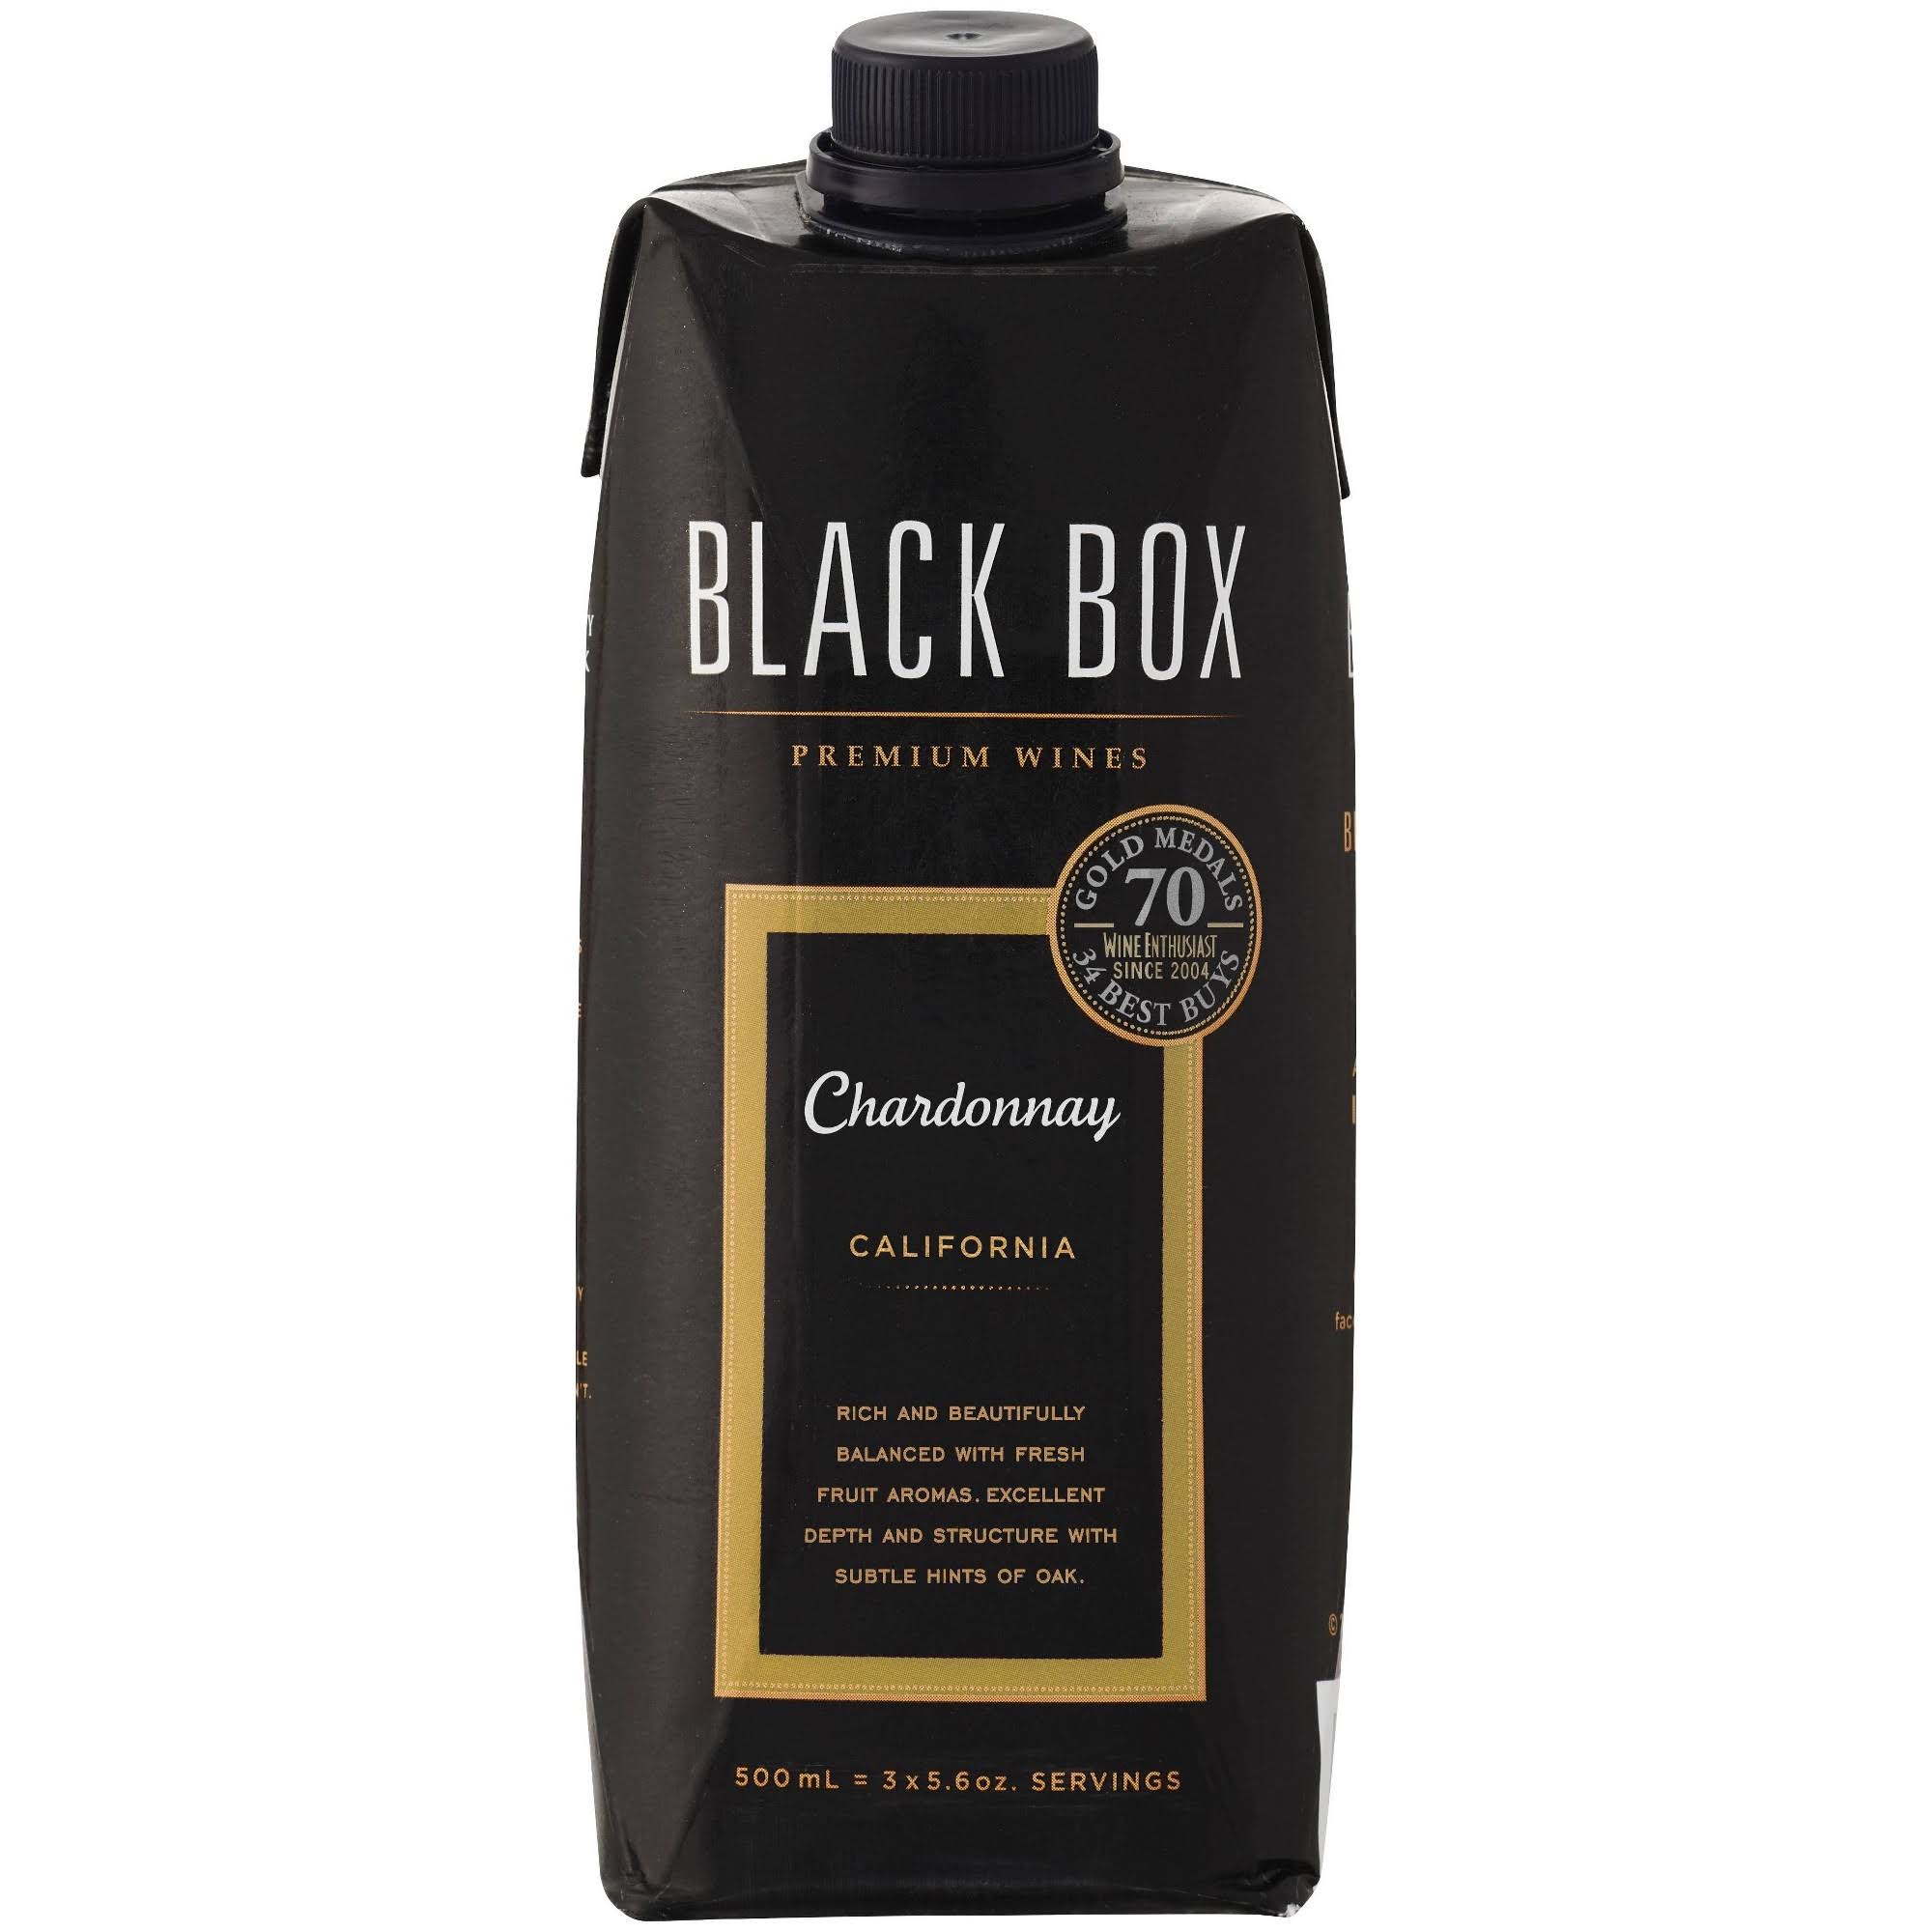 Black Box Chardonnay, Monterey County California, 2010 - 500 ml